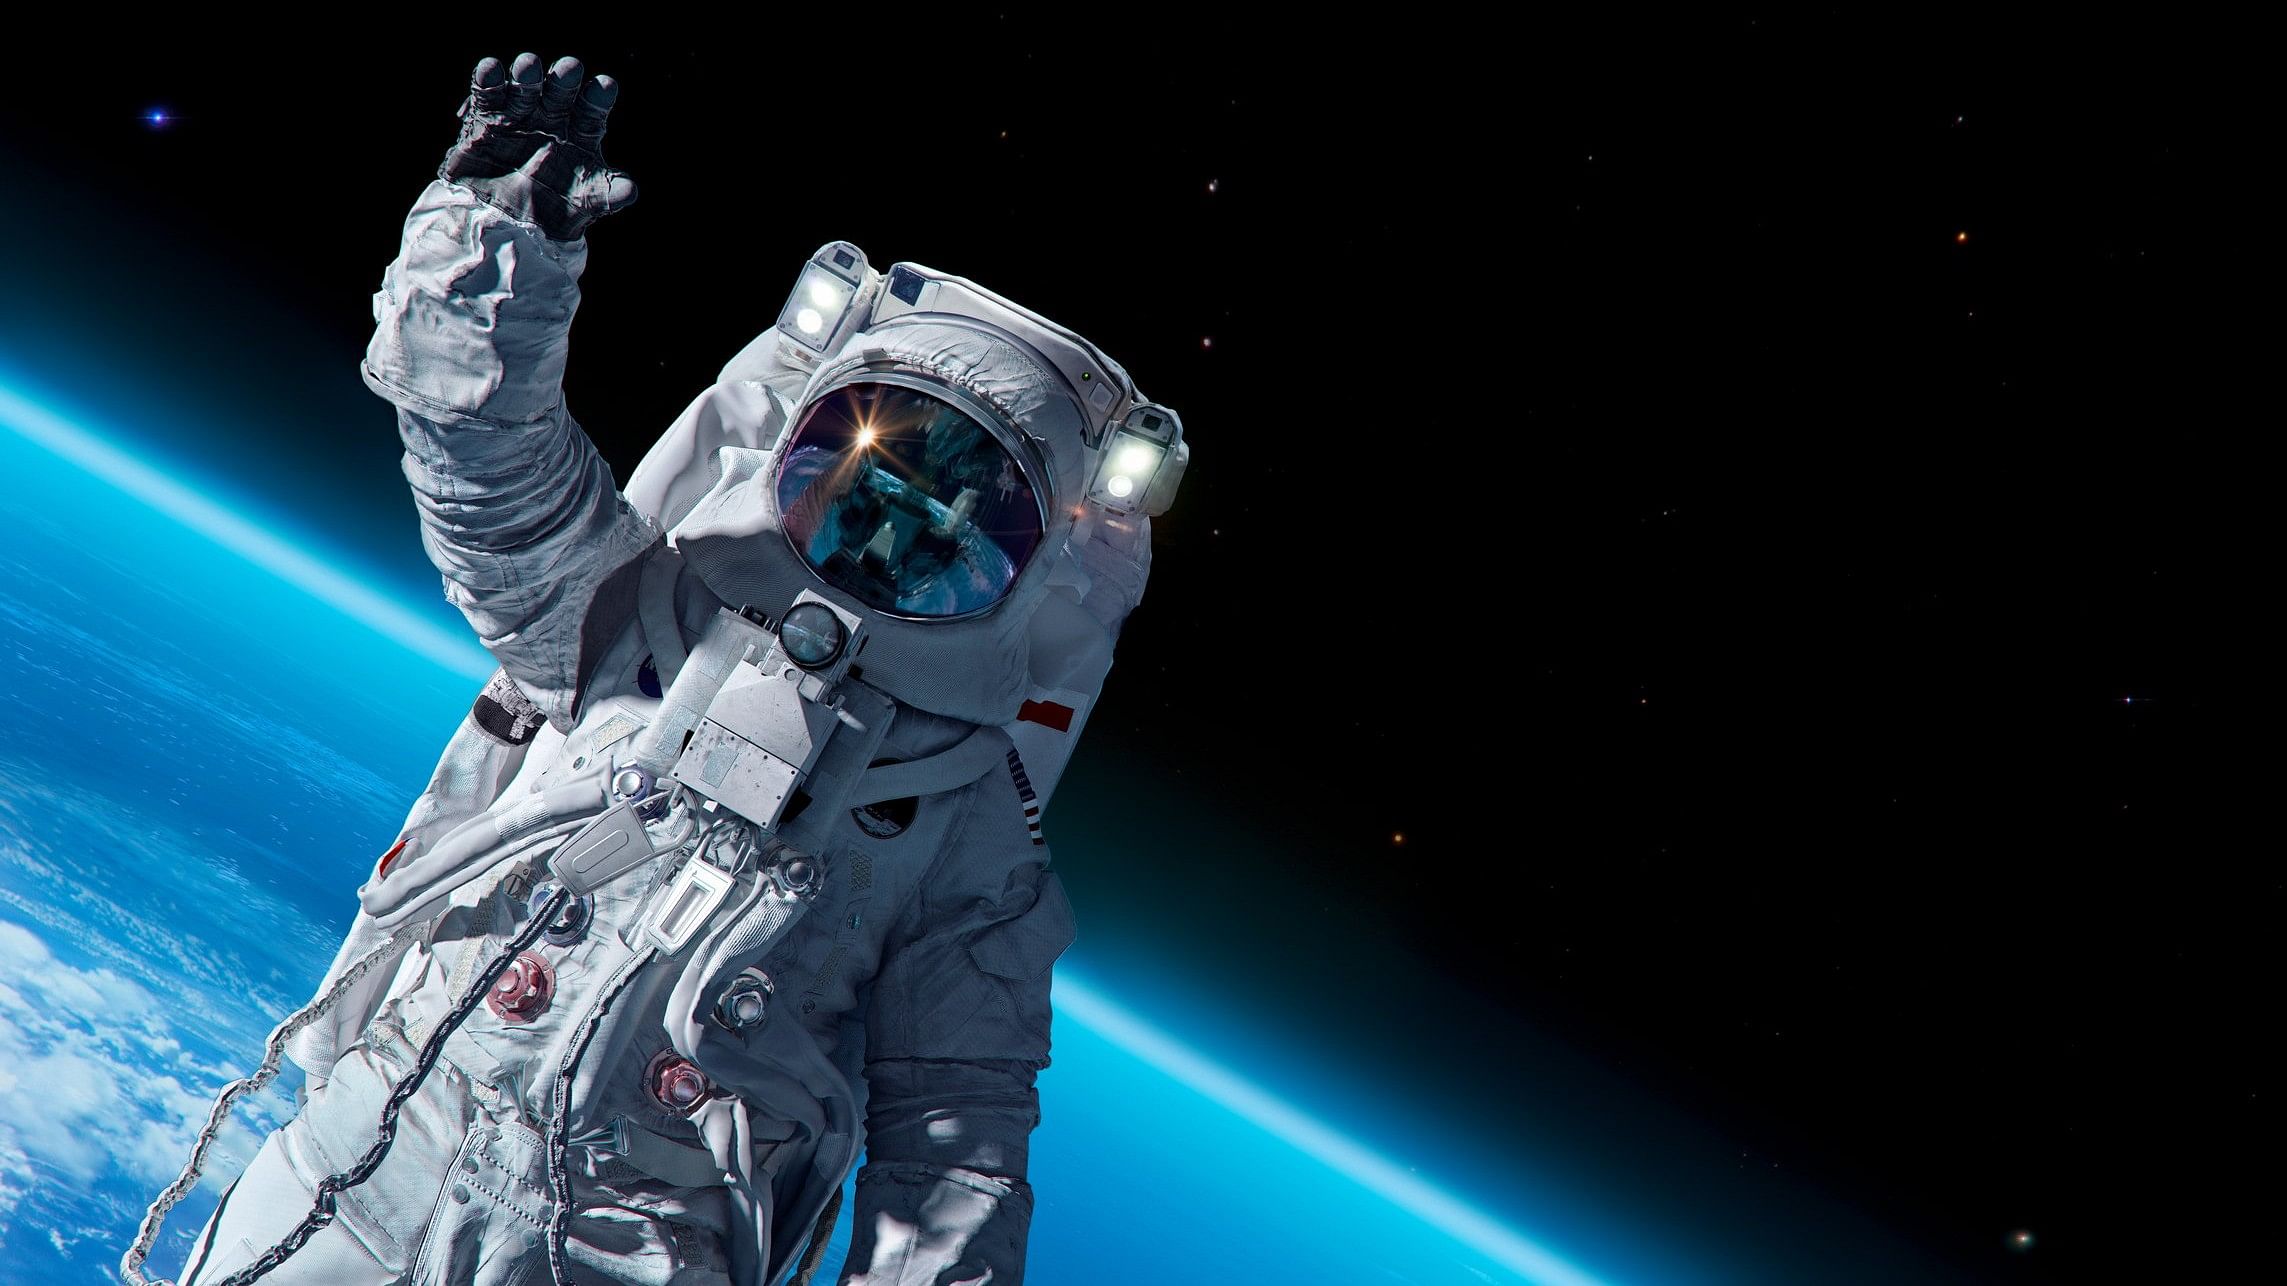 <div class="paragraphs"><p>Representative image showing an astronaut in a spacesuit.</p></div>